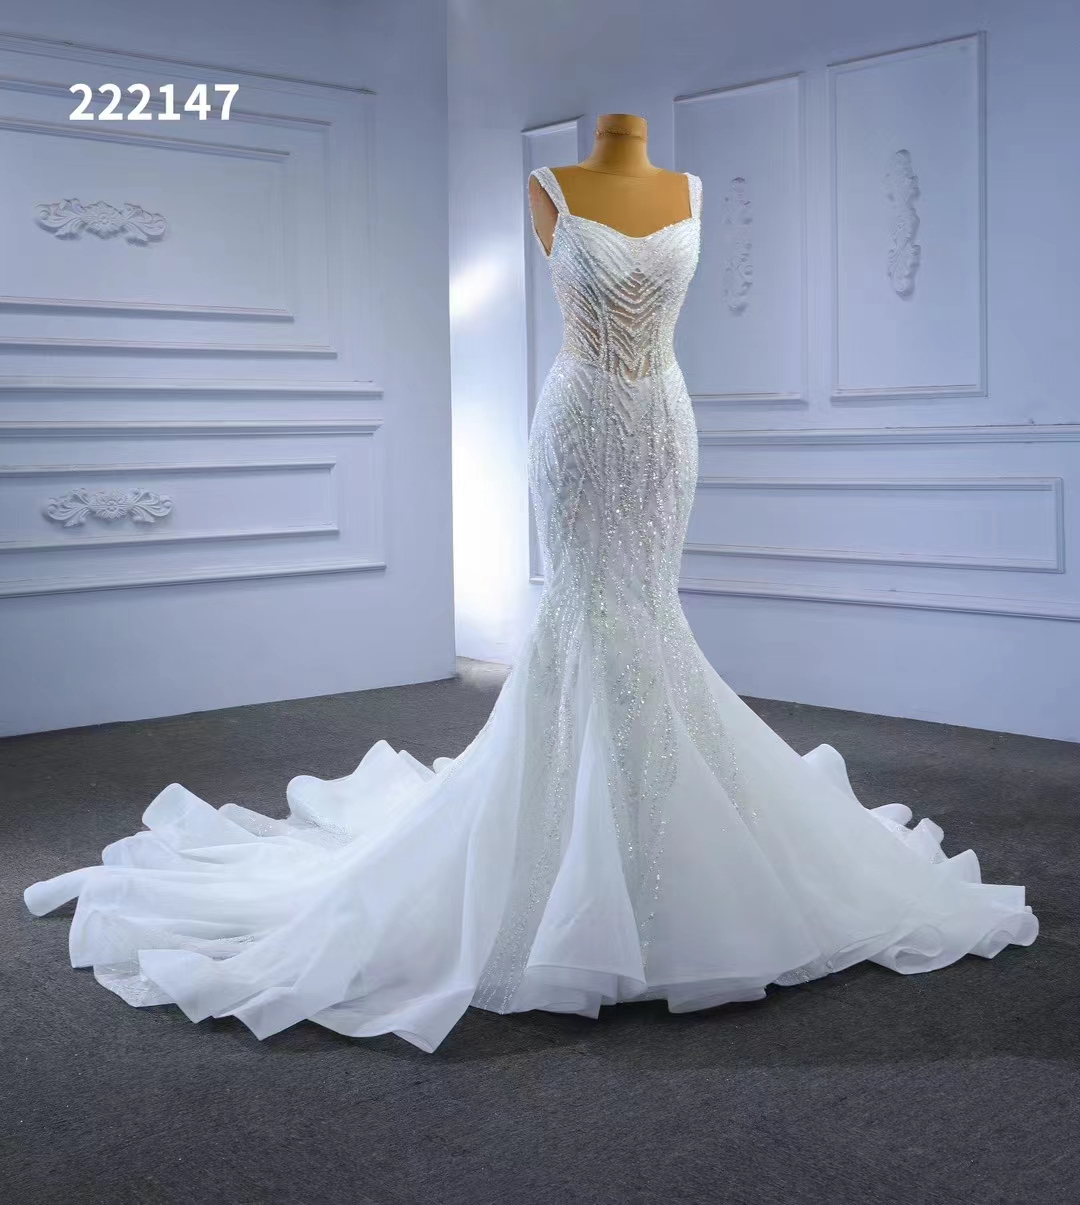 Vestido de noiva de sereia Mori Super Beautiful Dream Lace Slim White Dress Sm222147